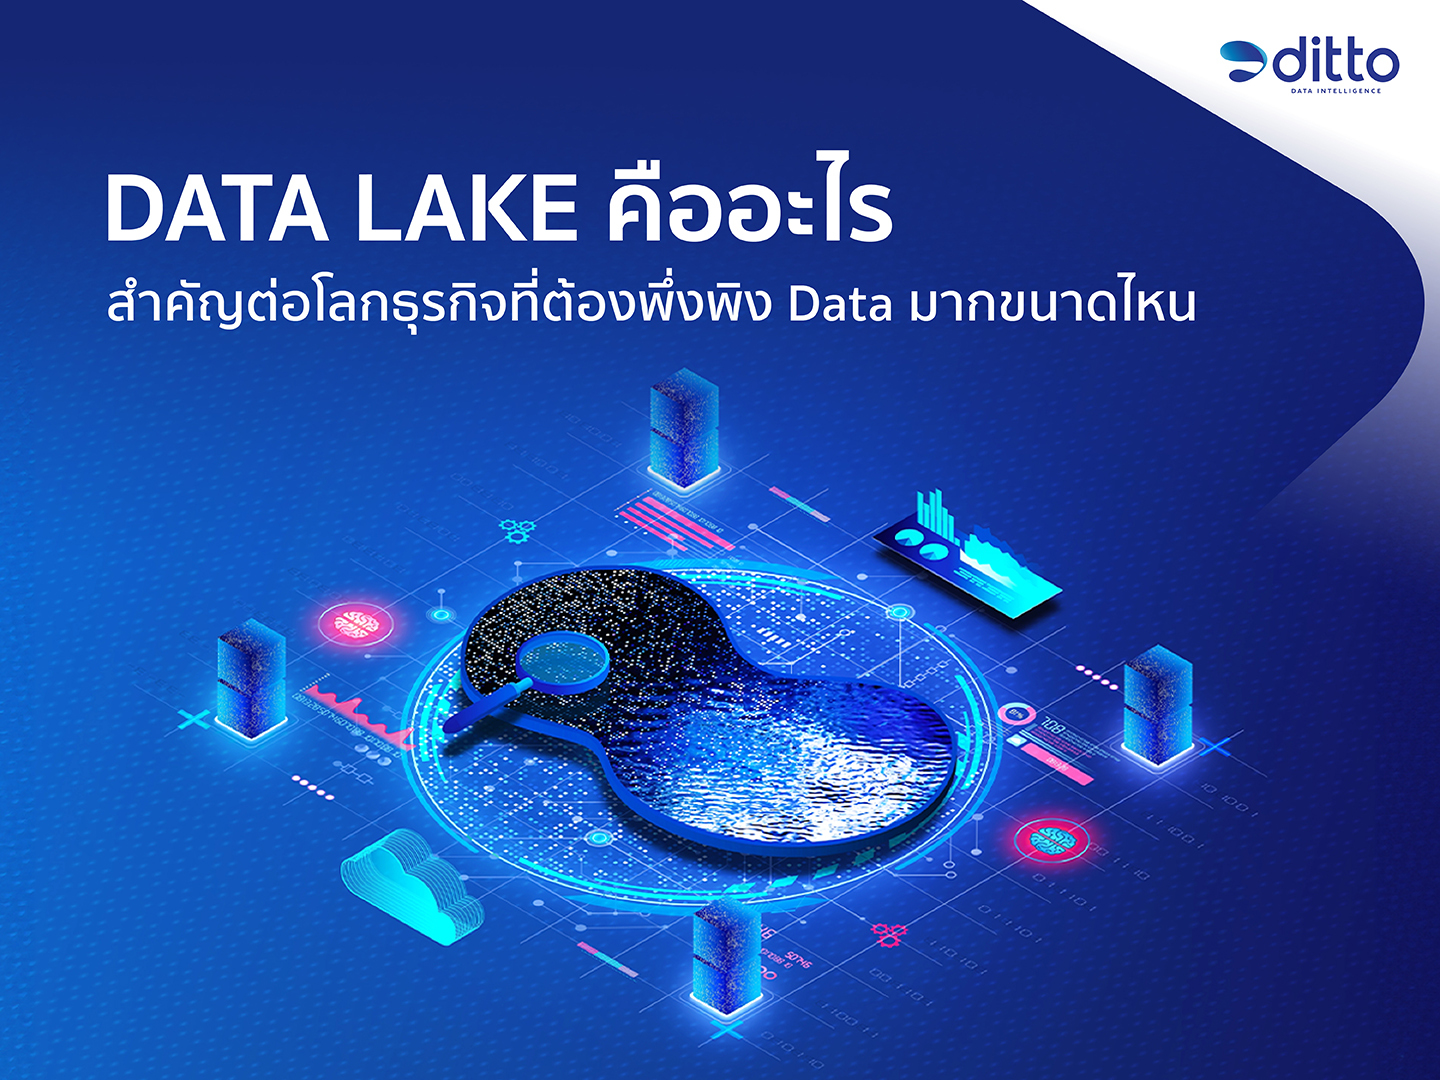 Data Lake คือ